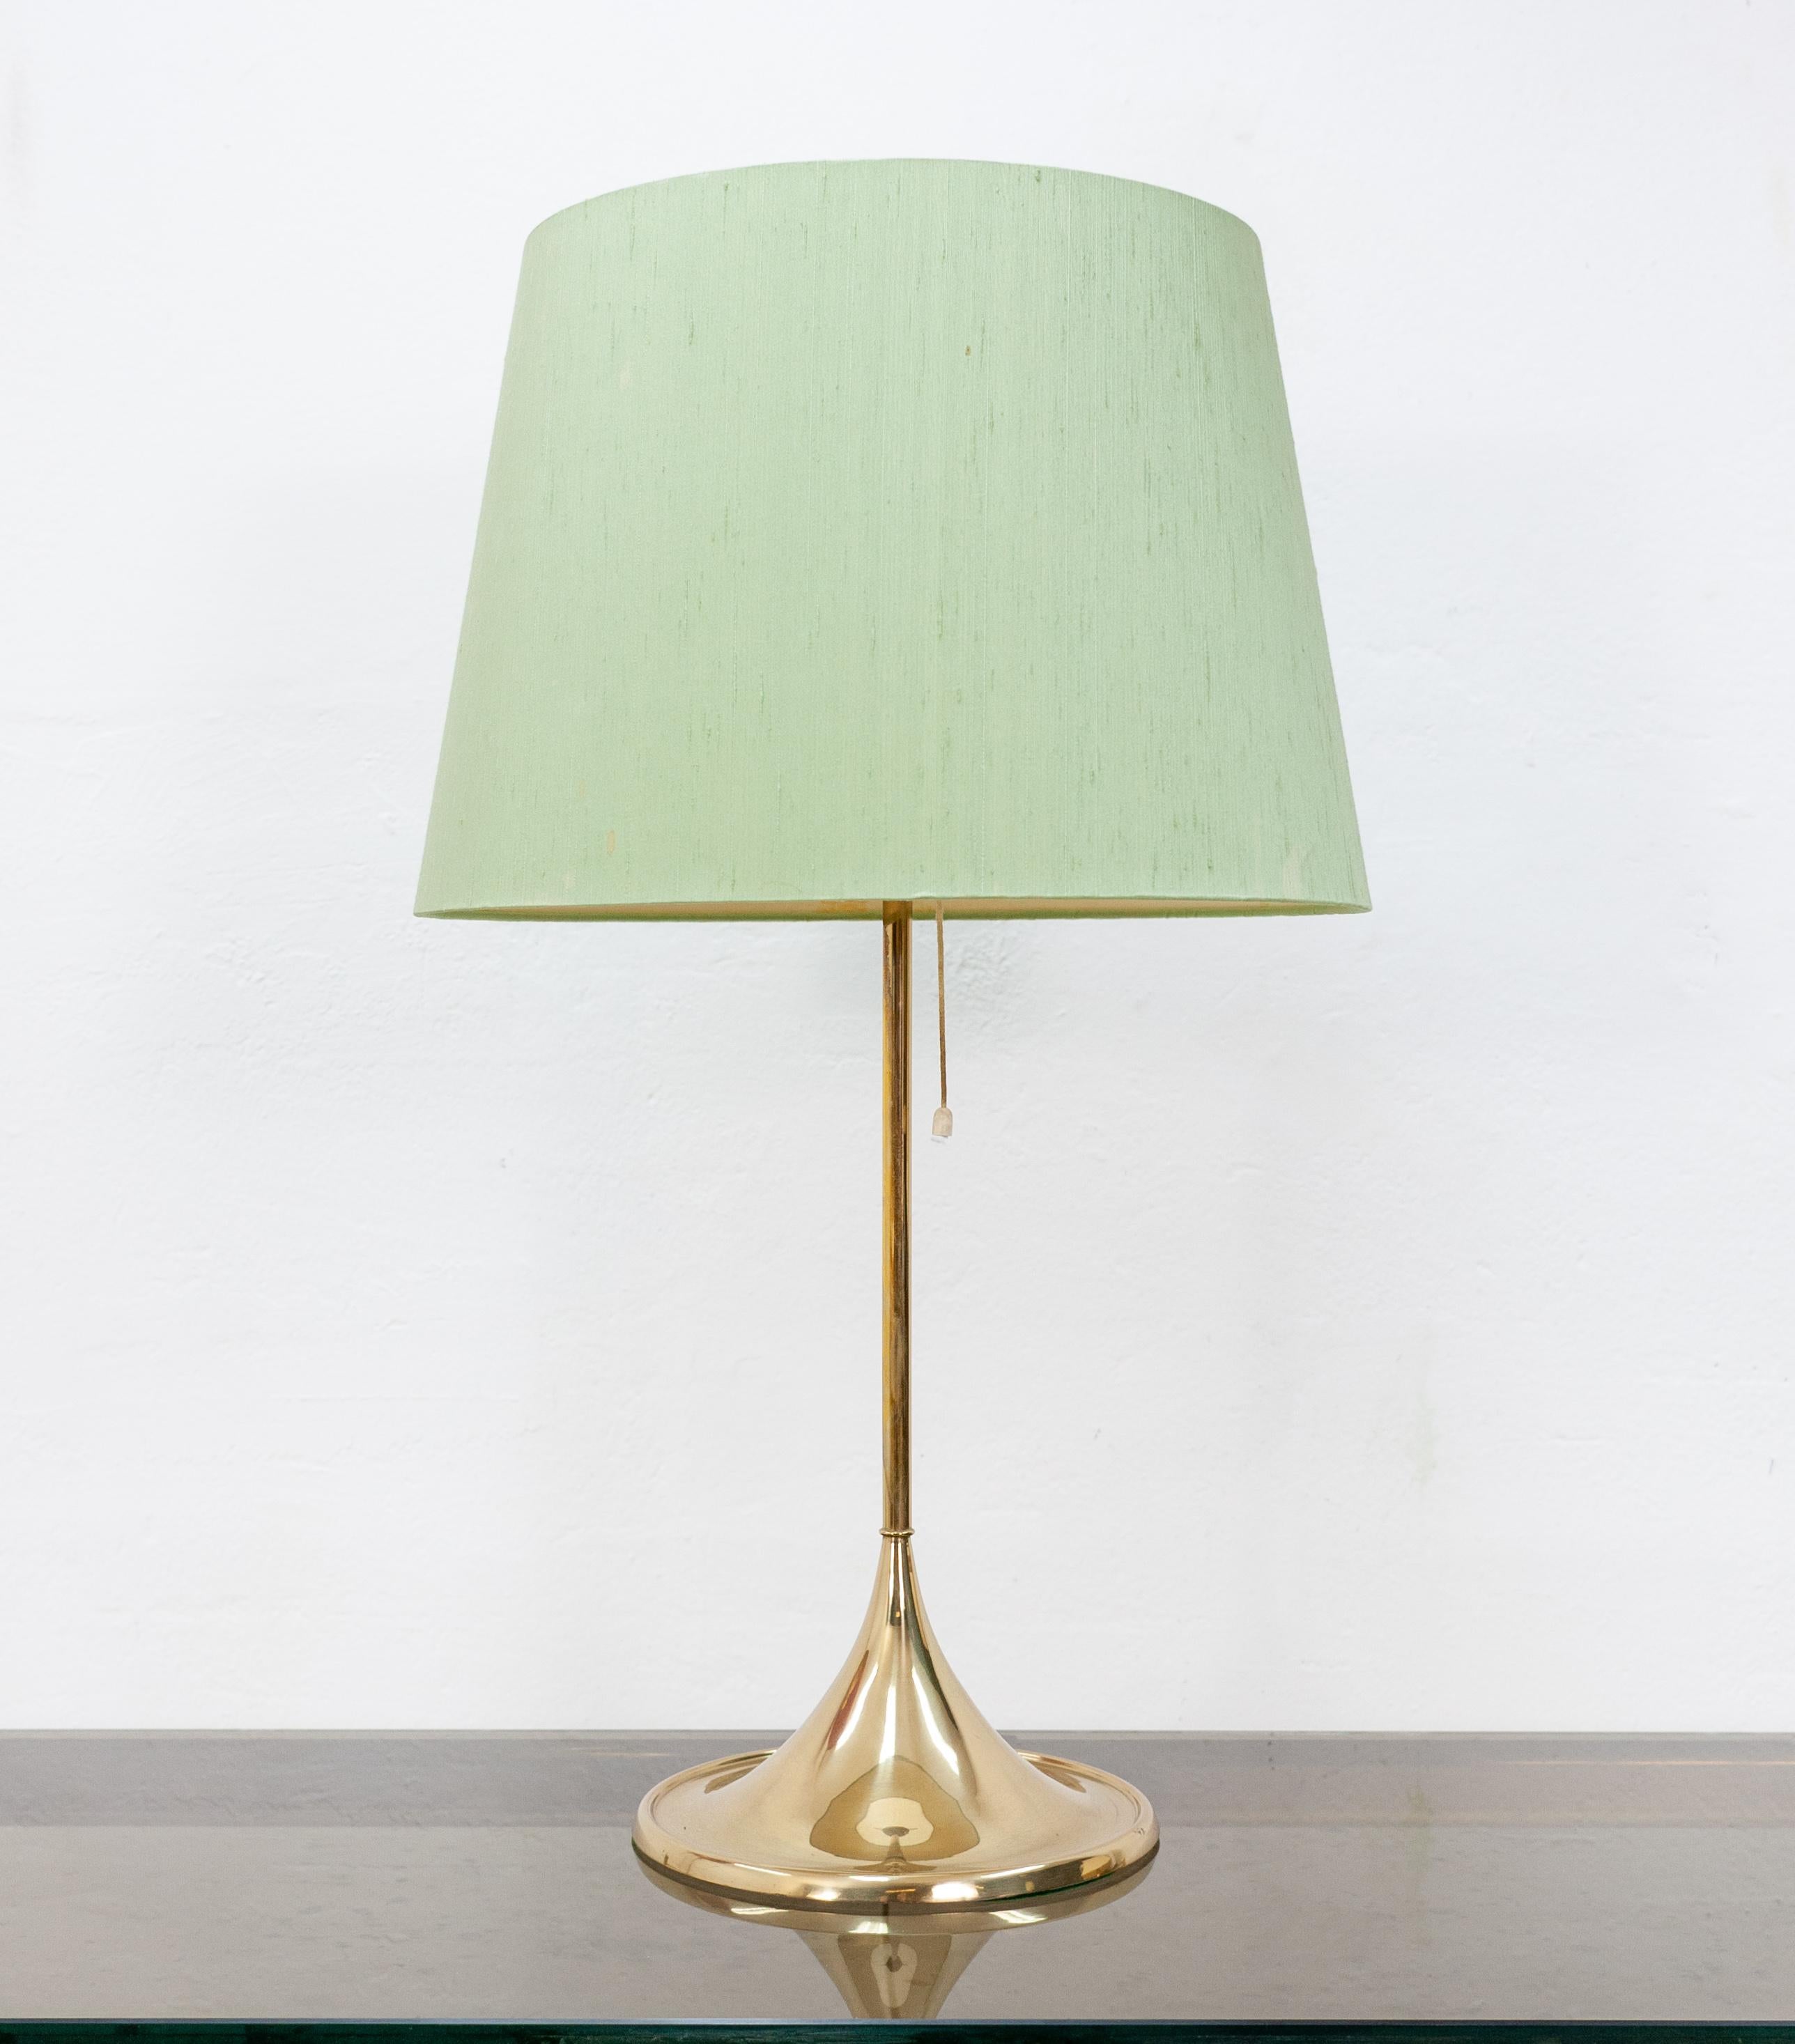 Bergbom B-024 Table Lamp with Green Shade, 1950s 3